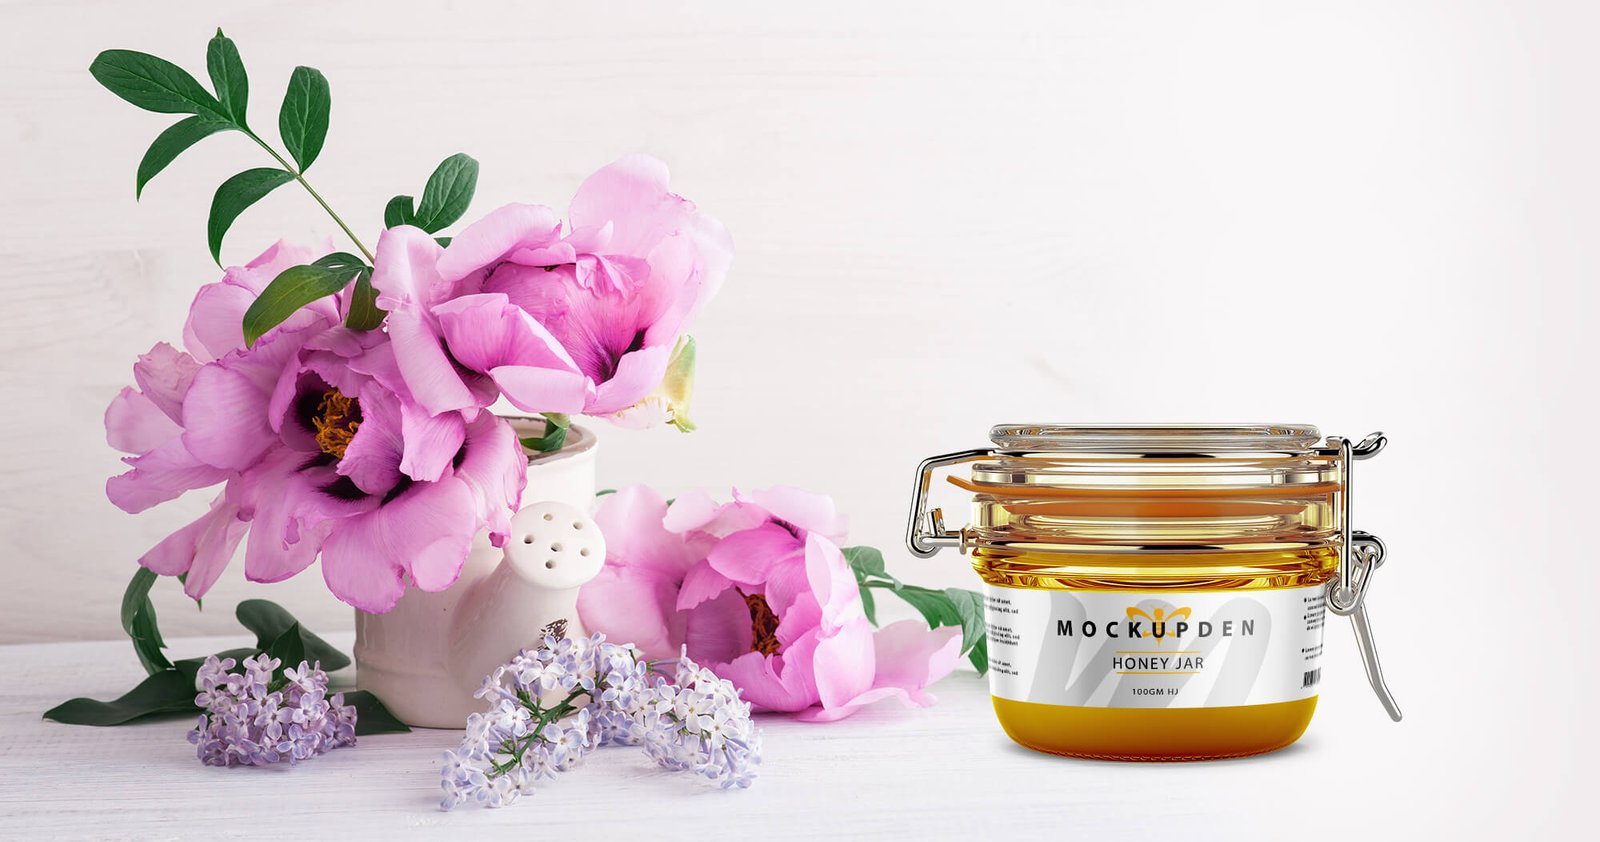 Free Honey Jar Mockup PSD Template:| Mockupden Exclusive